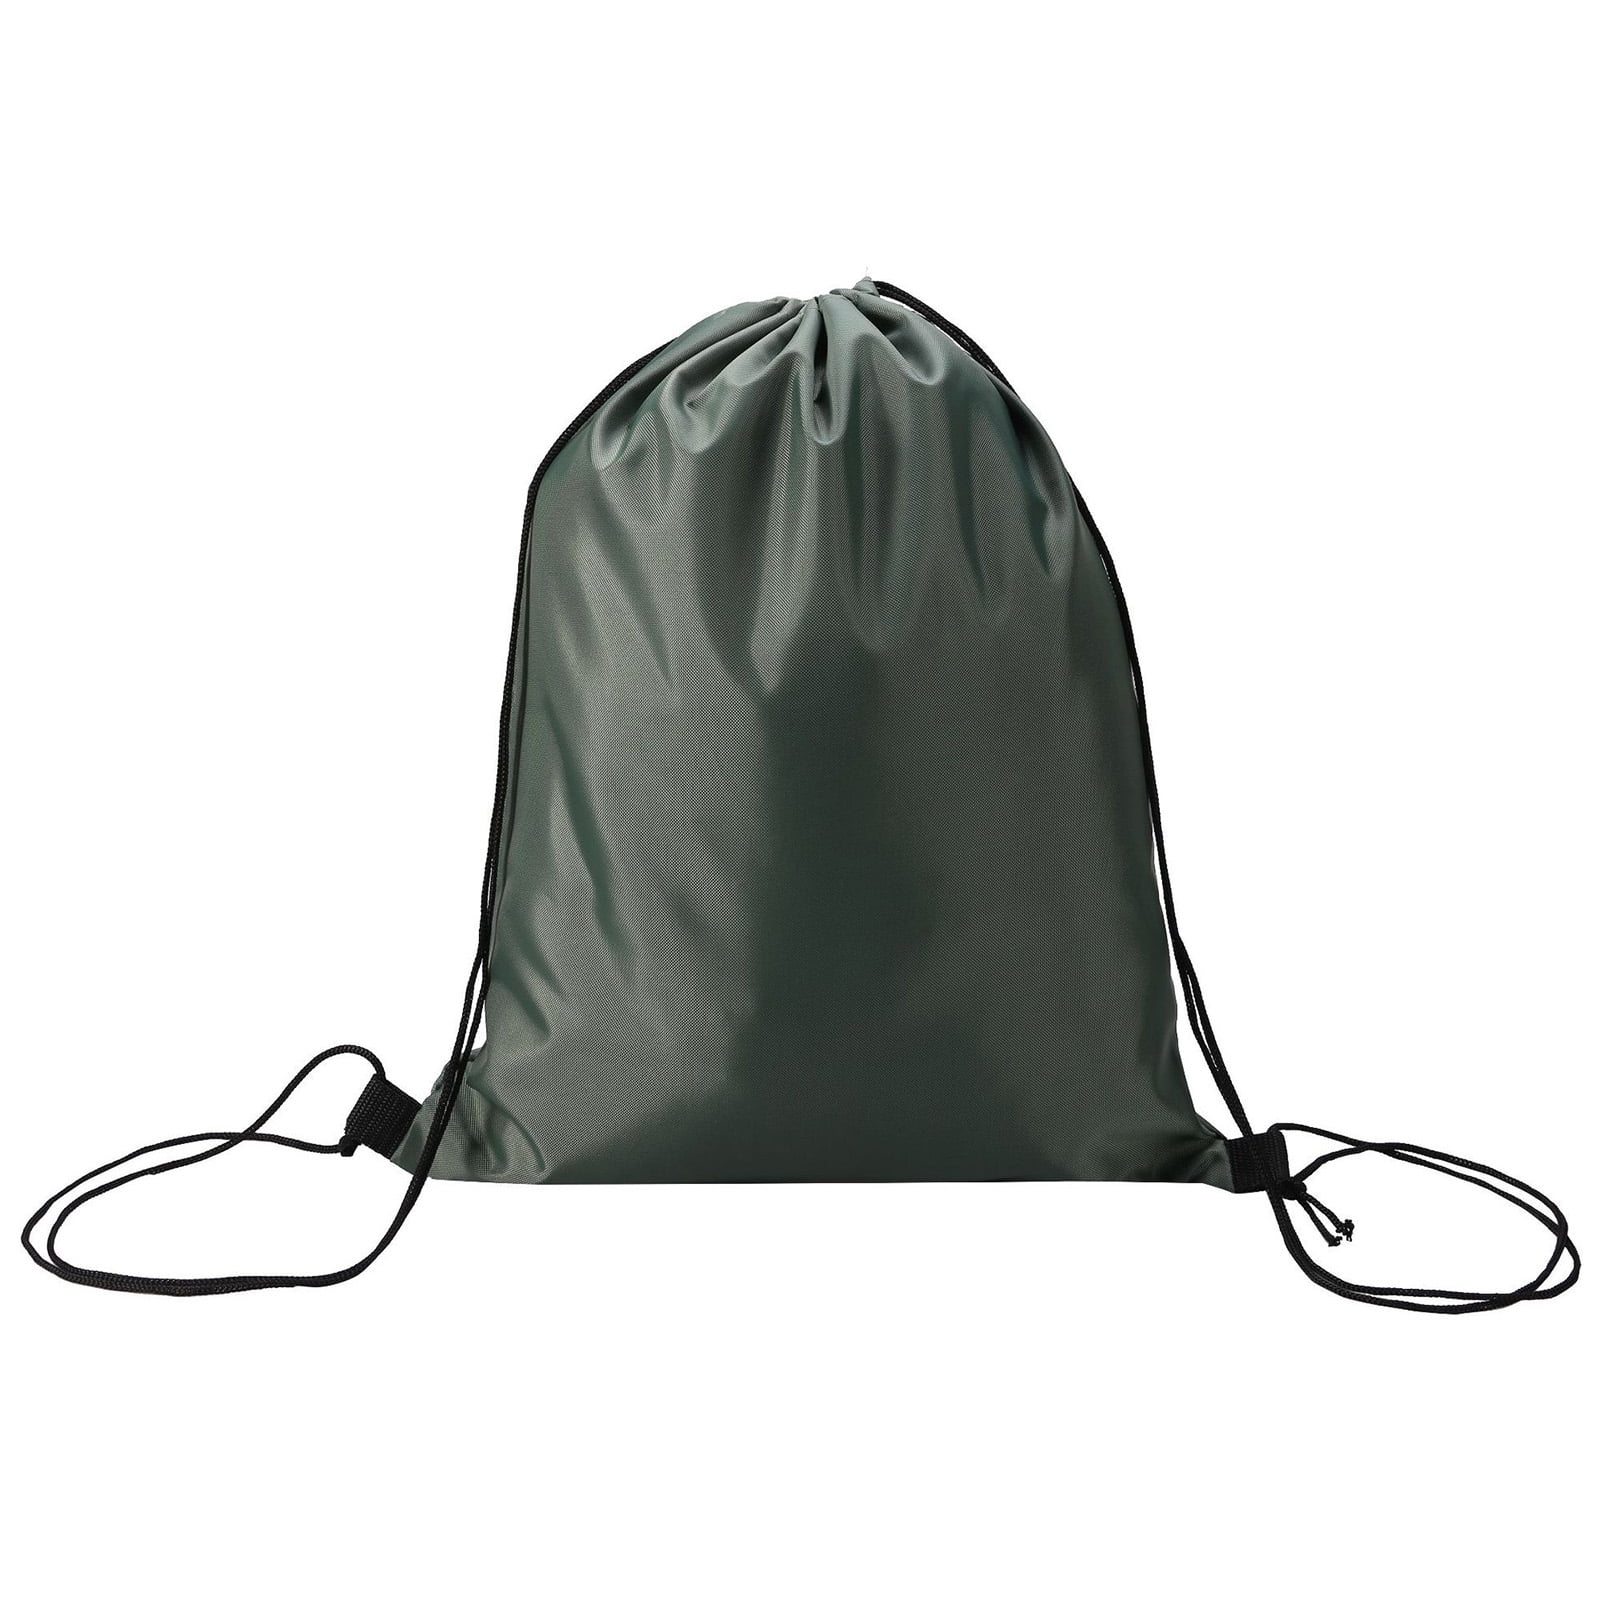 Farfi Drawstring Backpack Folding Waterproof Lightweight Easy to Clean  Hanging Storage Bag Outdoor Bag (White) 